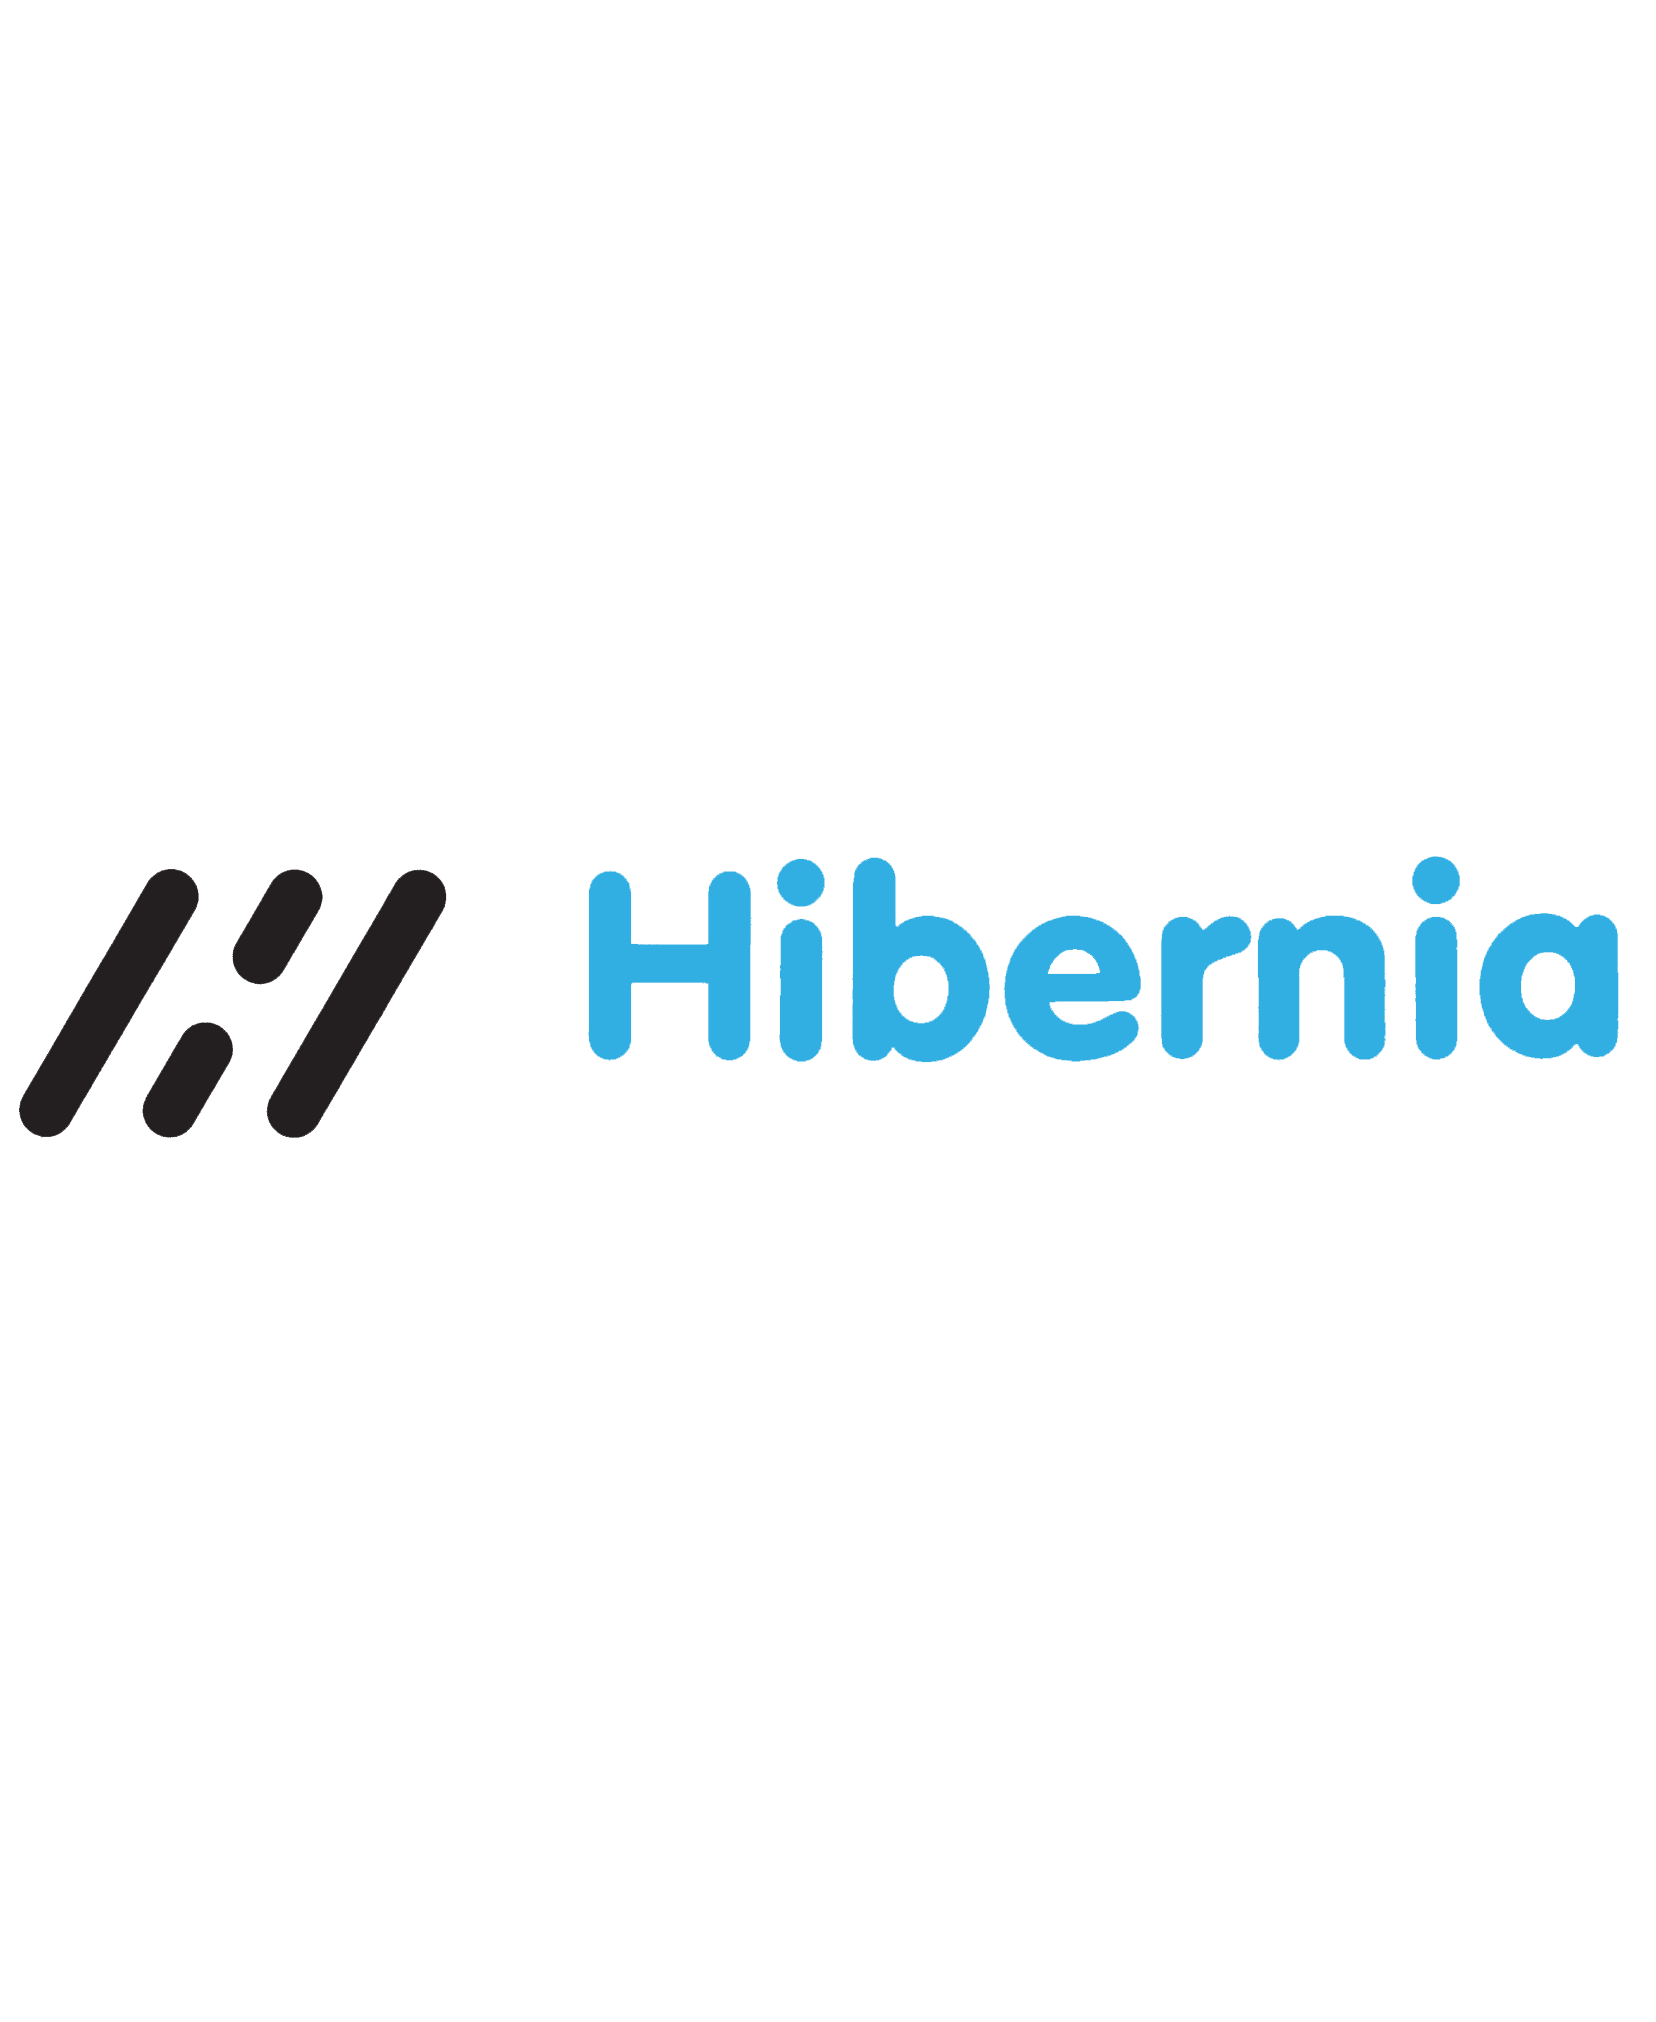 Hibernia Digital Twin – Power Generation System Digital Prototype